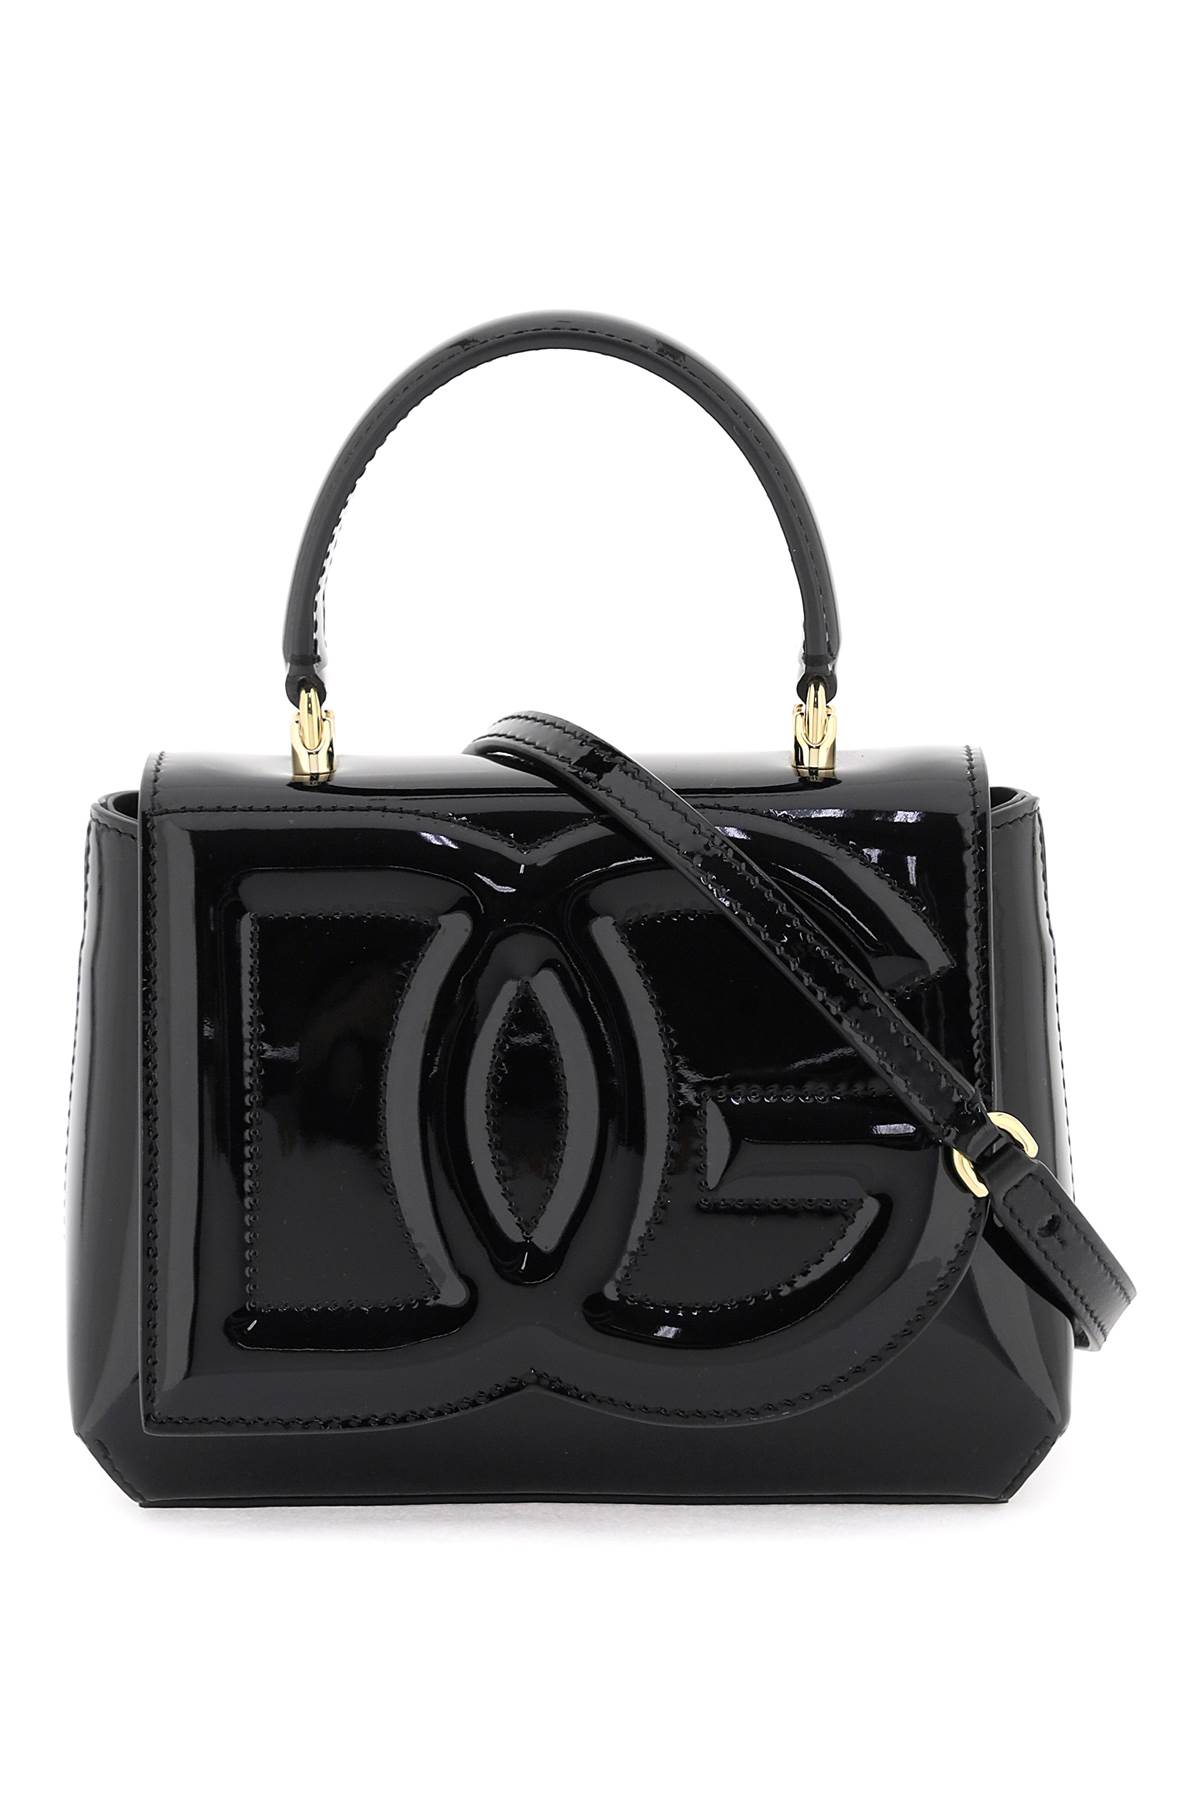 Dolce & Gabbana dg Patent Leather Handbag